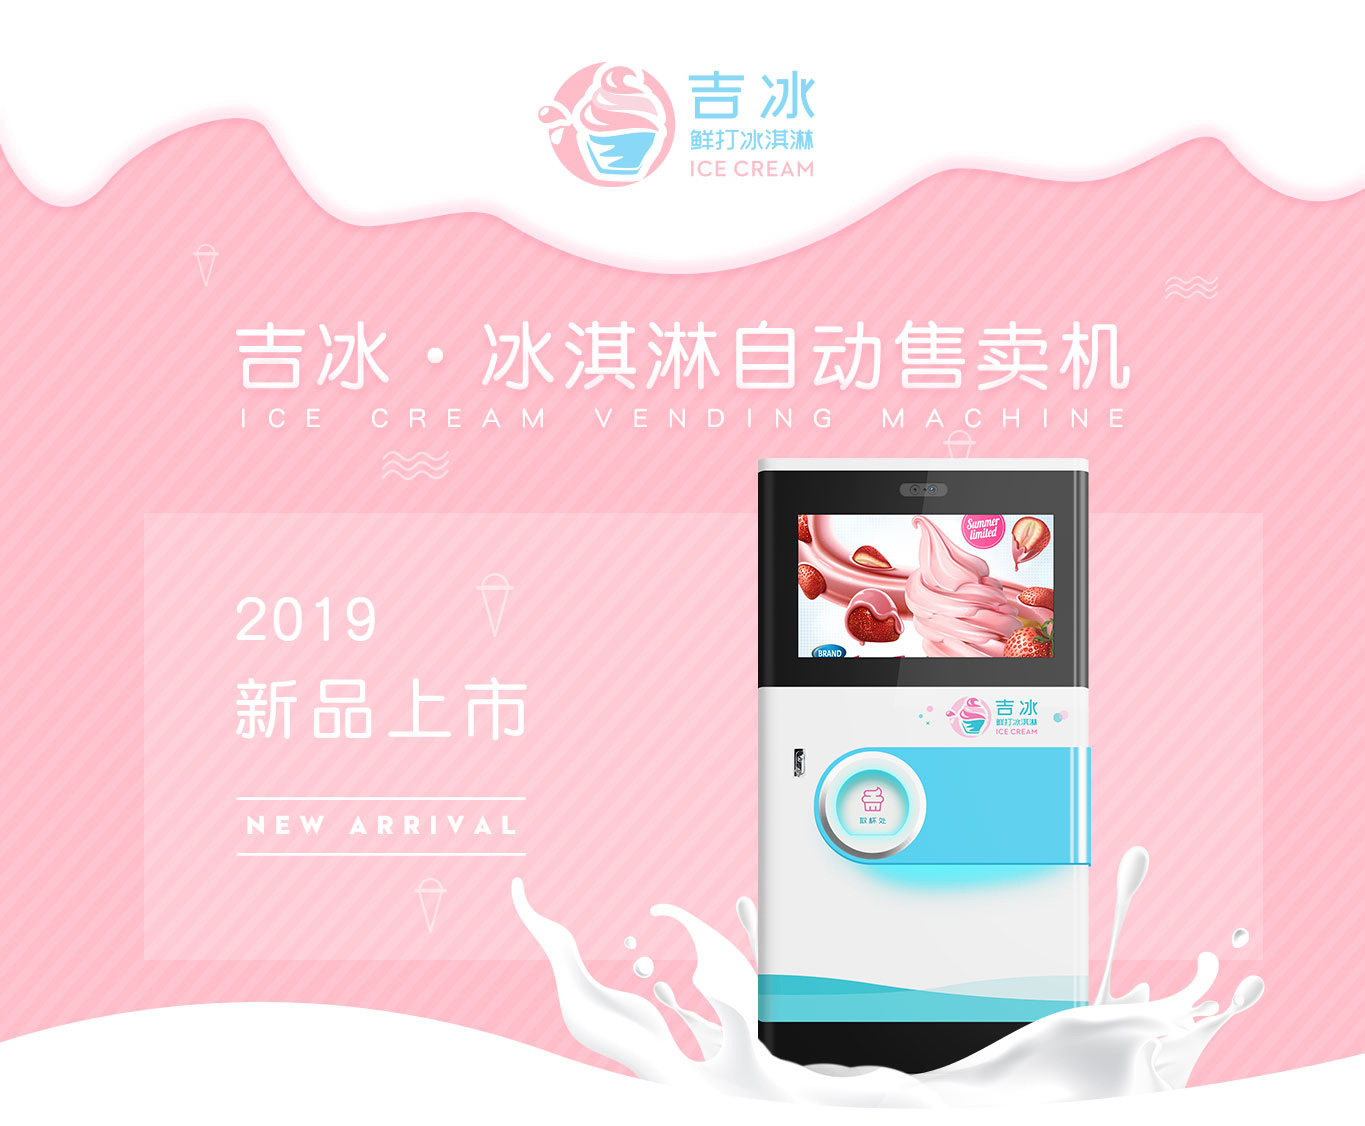 中华购彩网welcome(中国游)官方网站